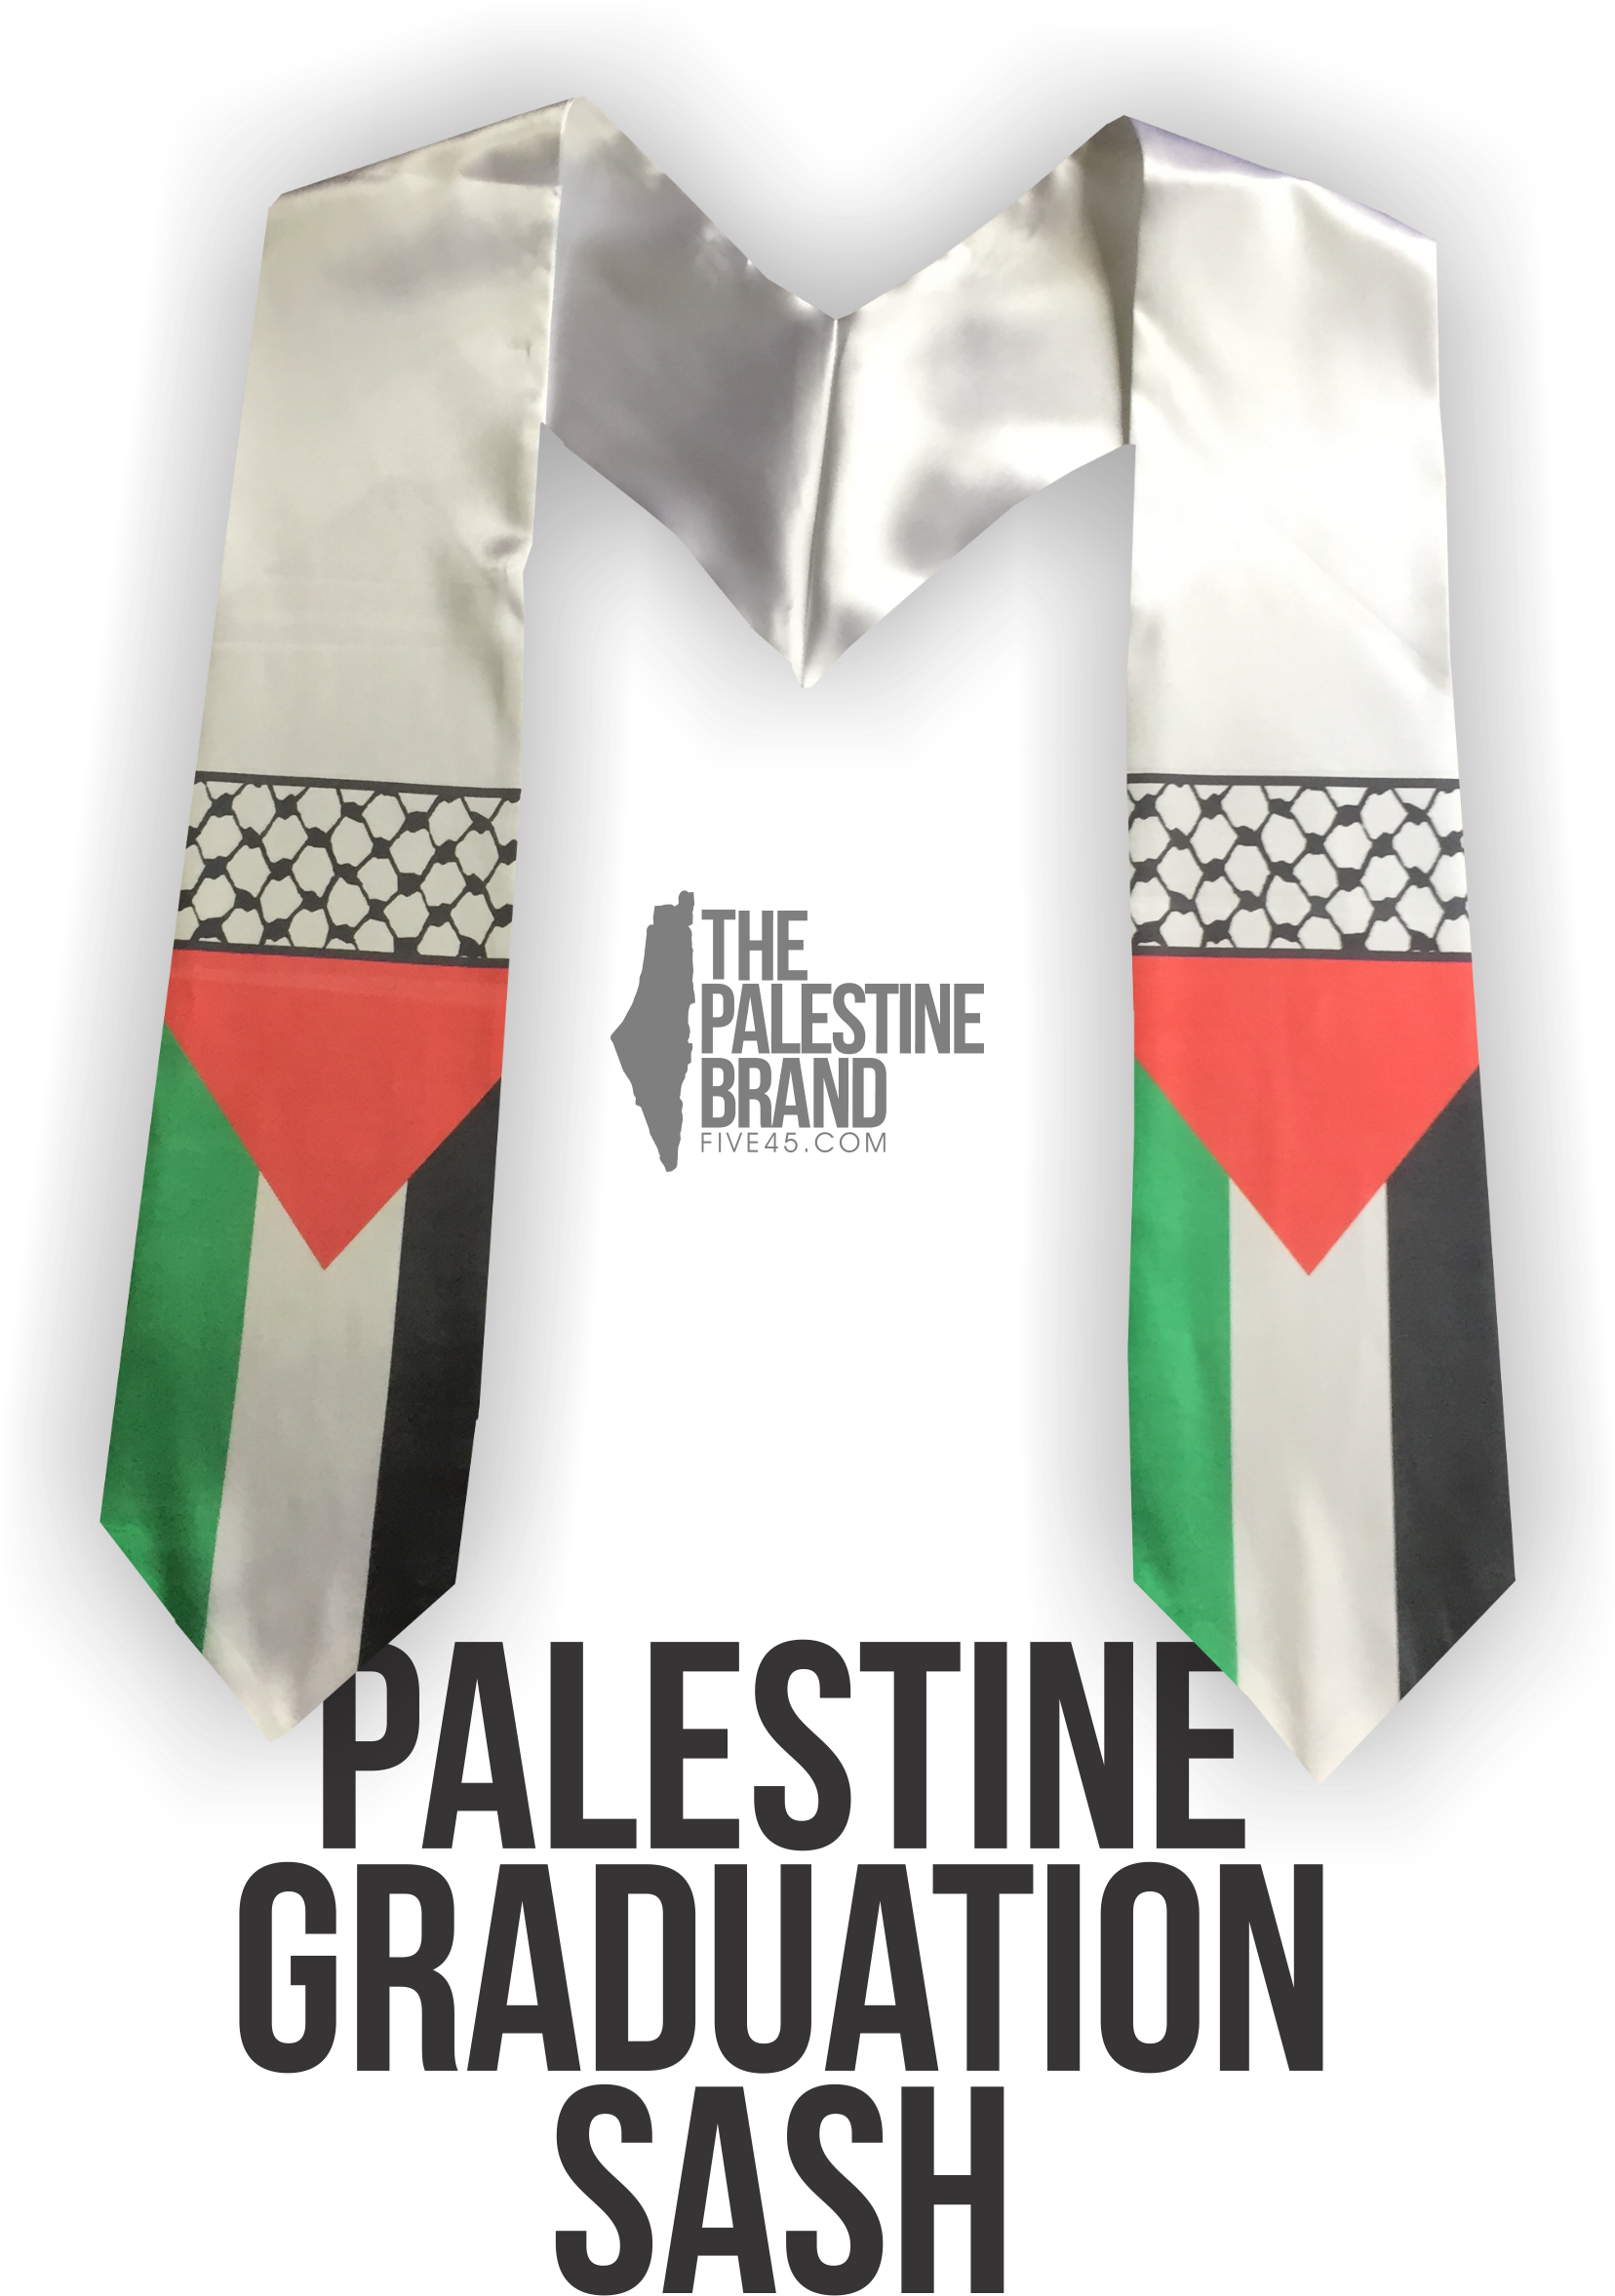 Image Of Palestine Graduation Sash - Palestine Graduation Sash (1714x2369), Png Download